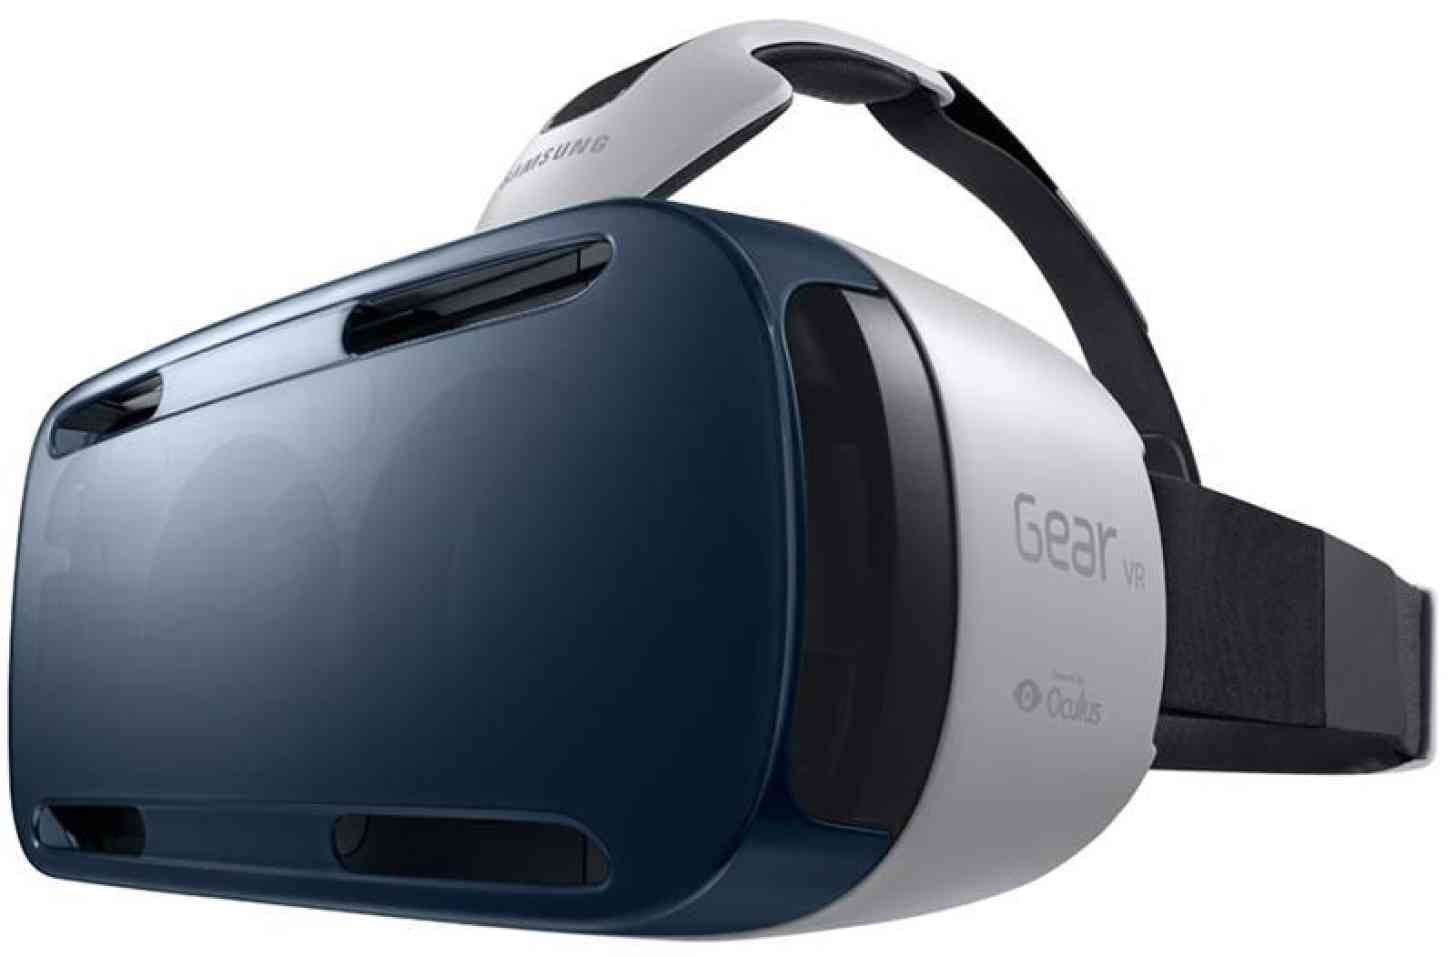 Samsung Gear VR Innovator Edition angle